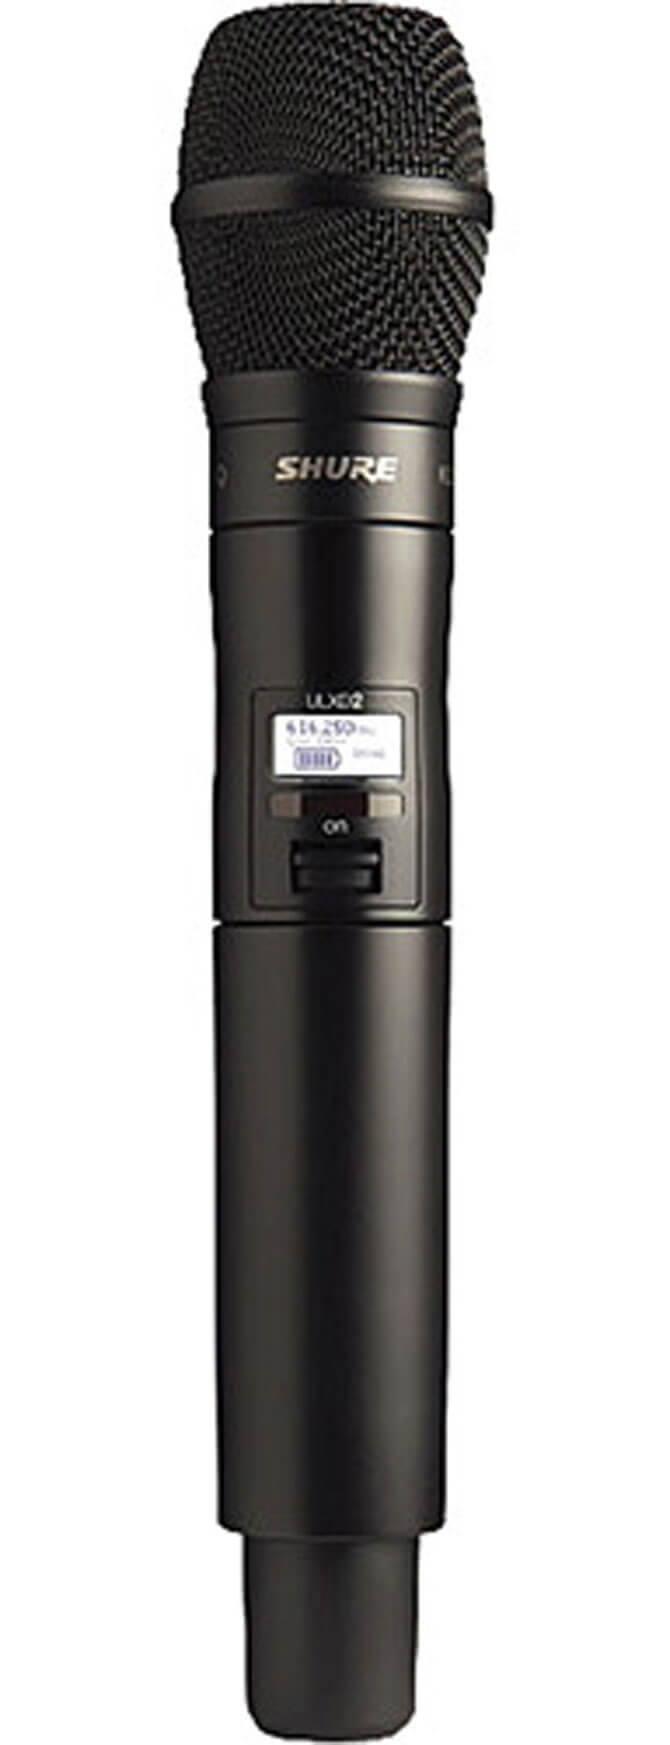 Shure general ULXD2/KSM9/HS TRansmisor de mano con micrófono ksm9 en color negro.